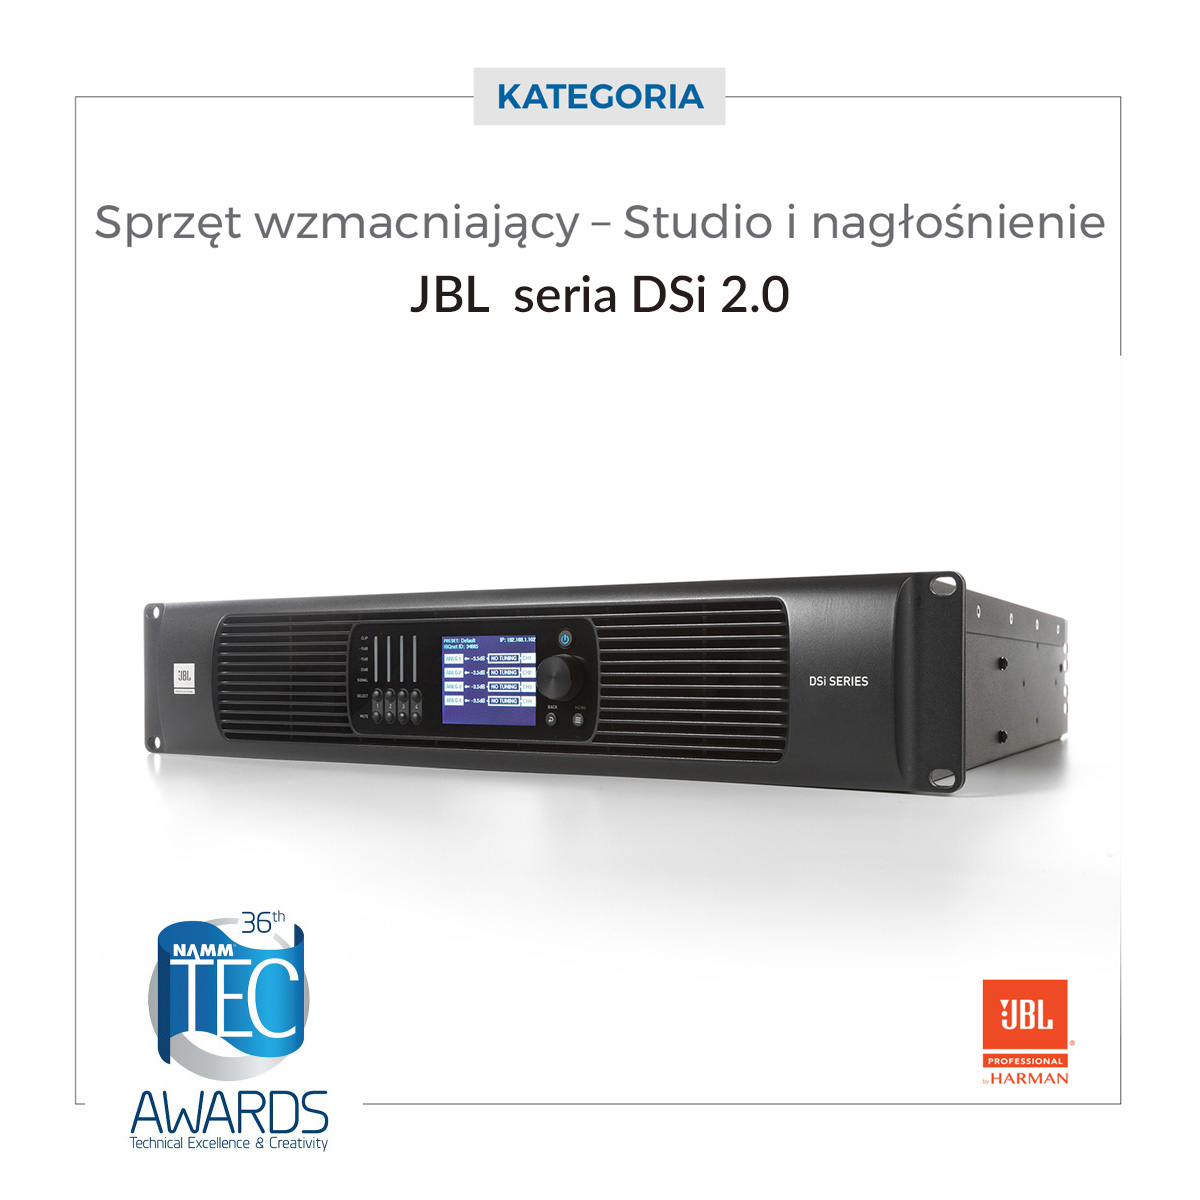 TEC Awards 36th HARMAN Pro JBL DSi2 0